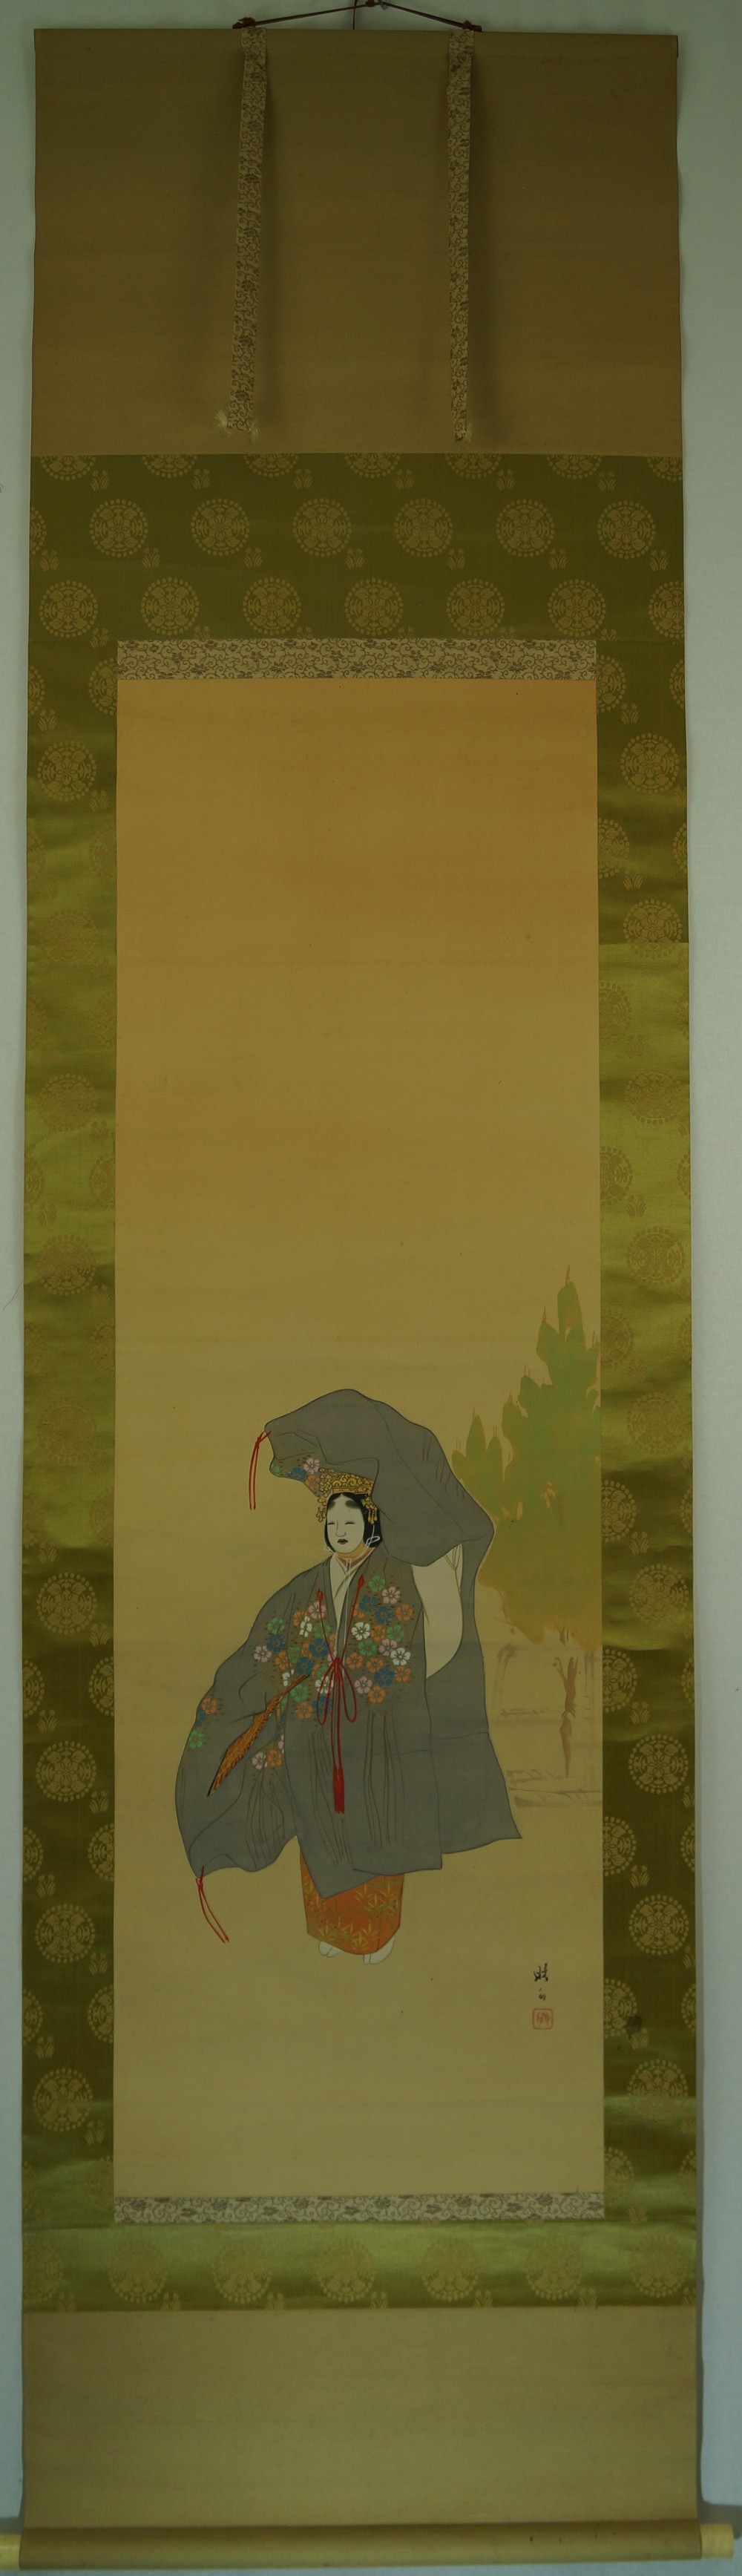 Frau im Kimono - Japanisches Rollbild (Kakejiku, Kakemono)